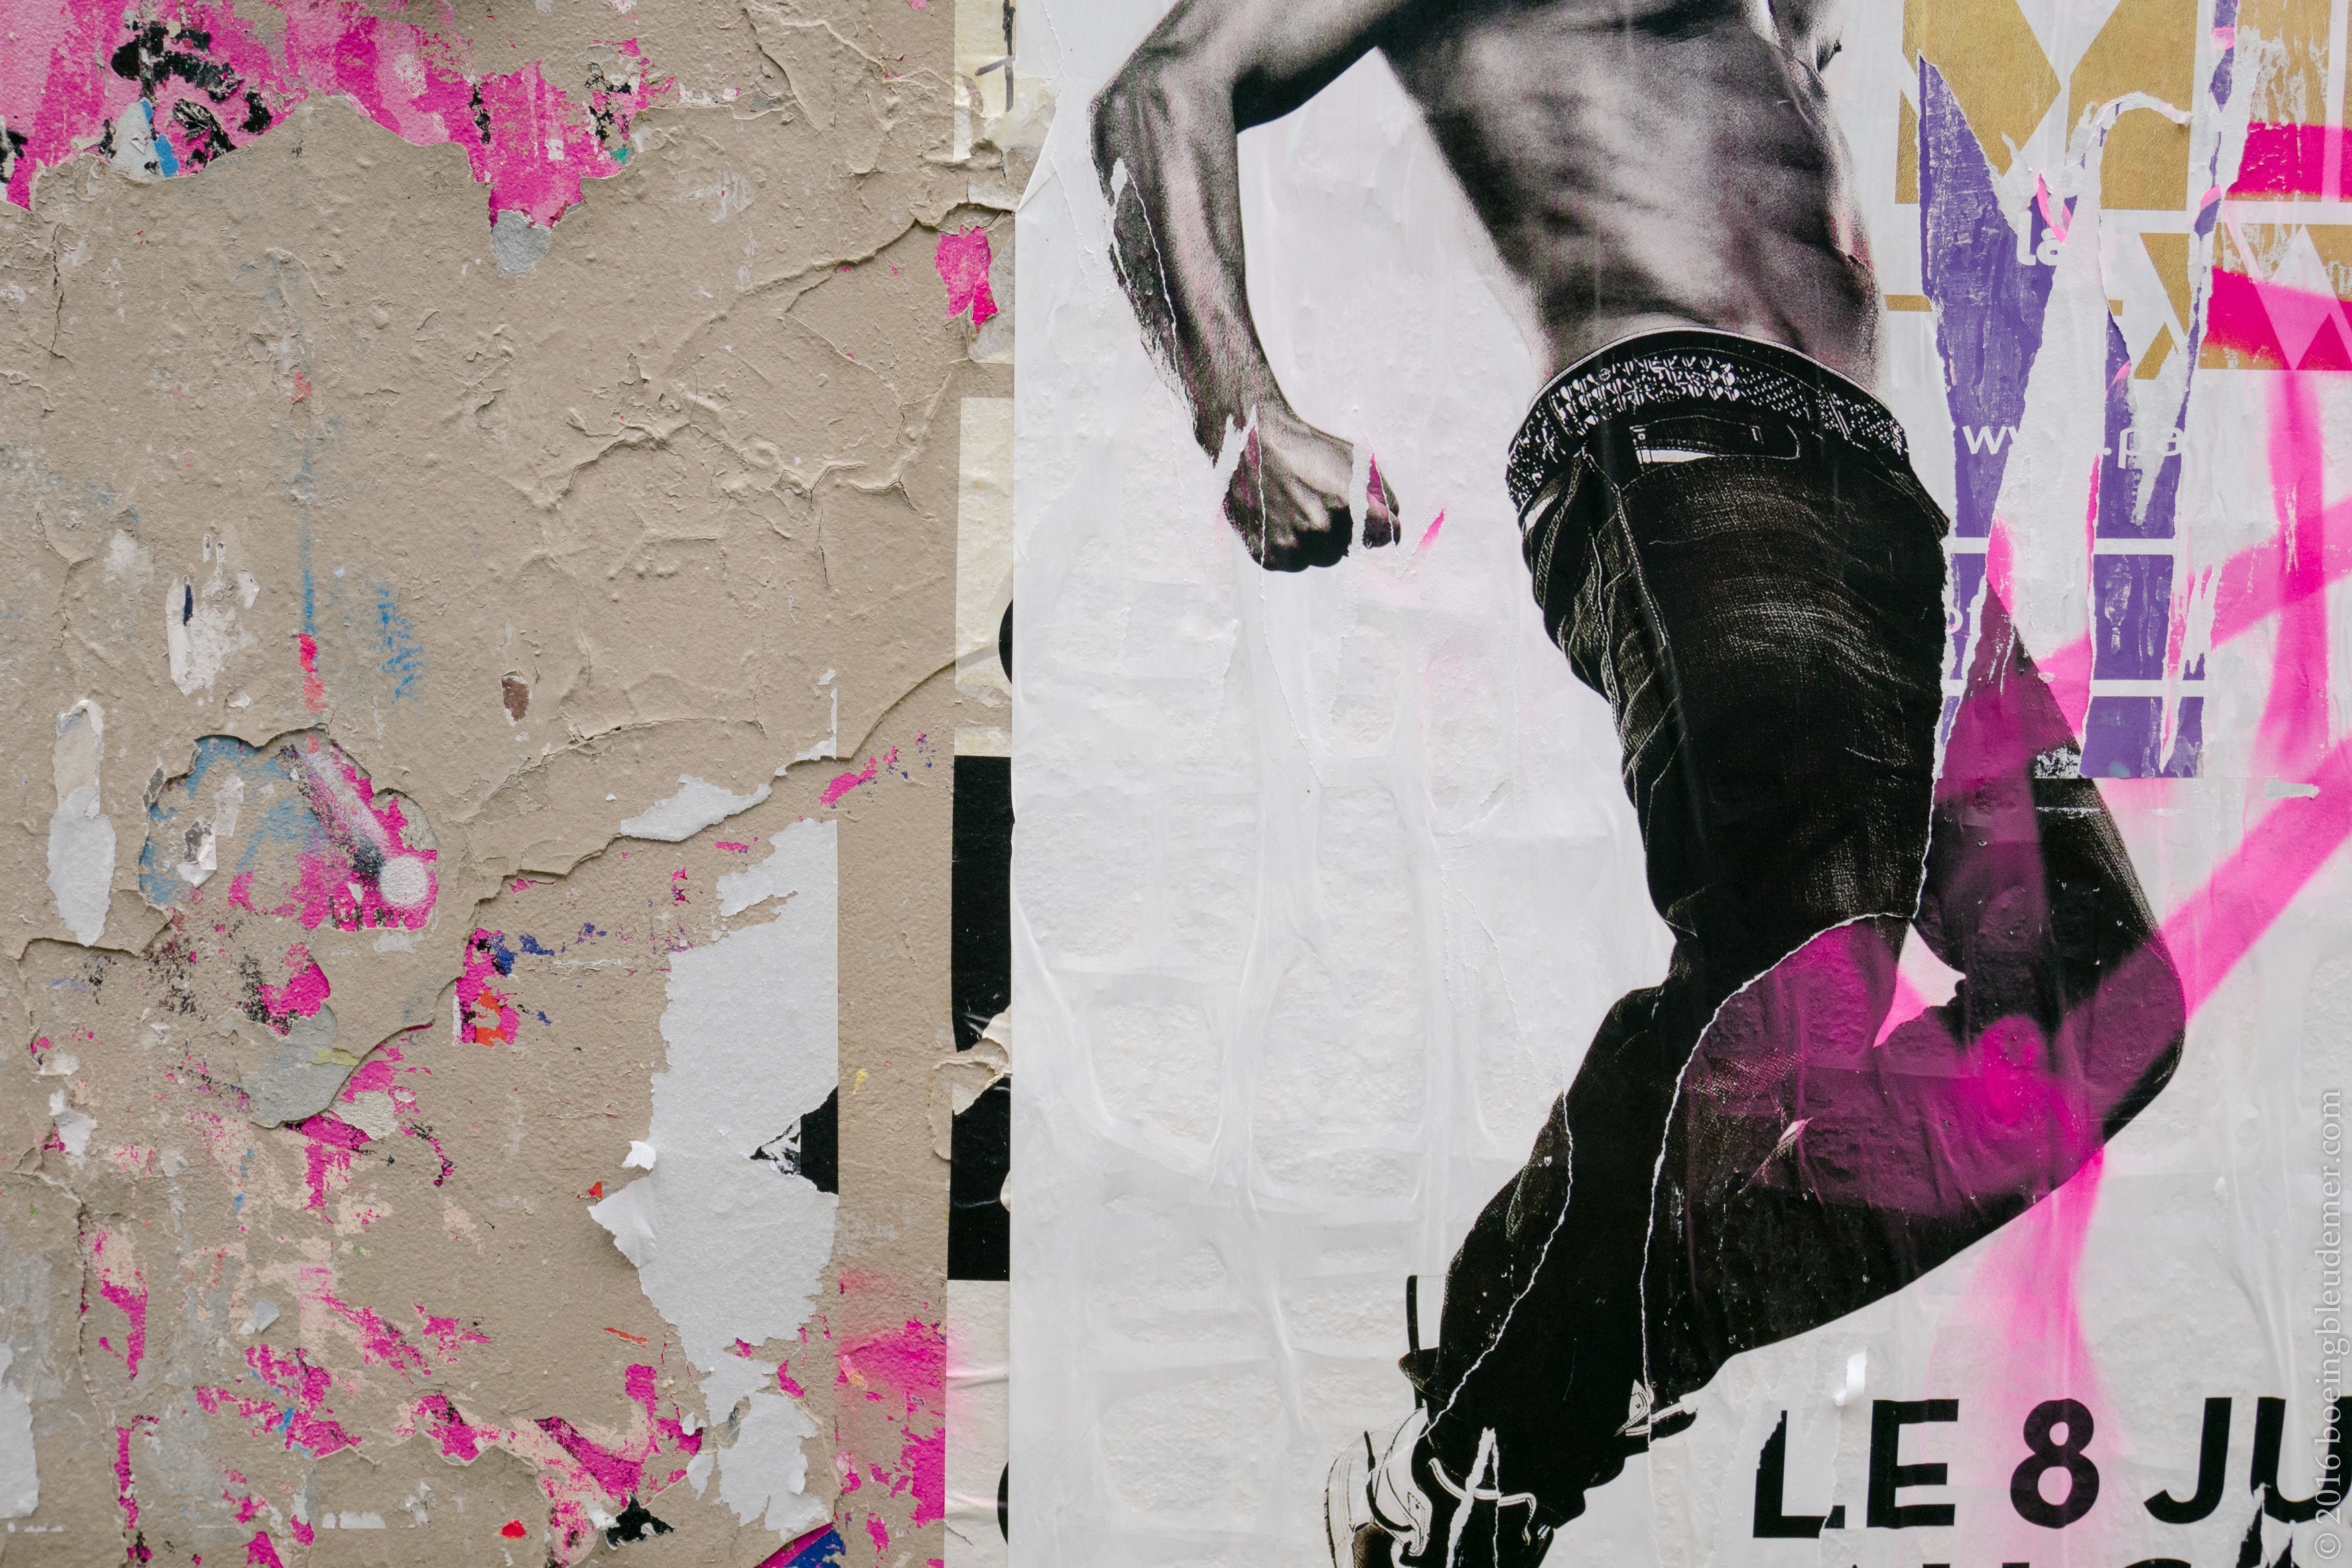 Lumix gm1, Paris, ville rose: graffitis